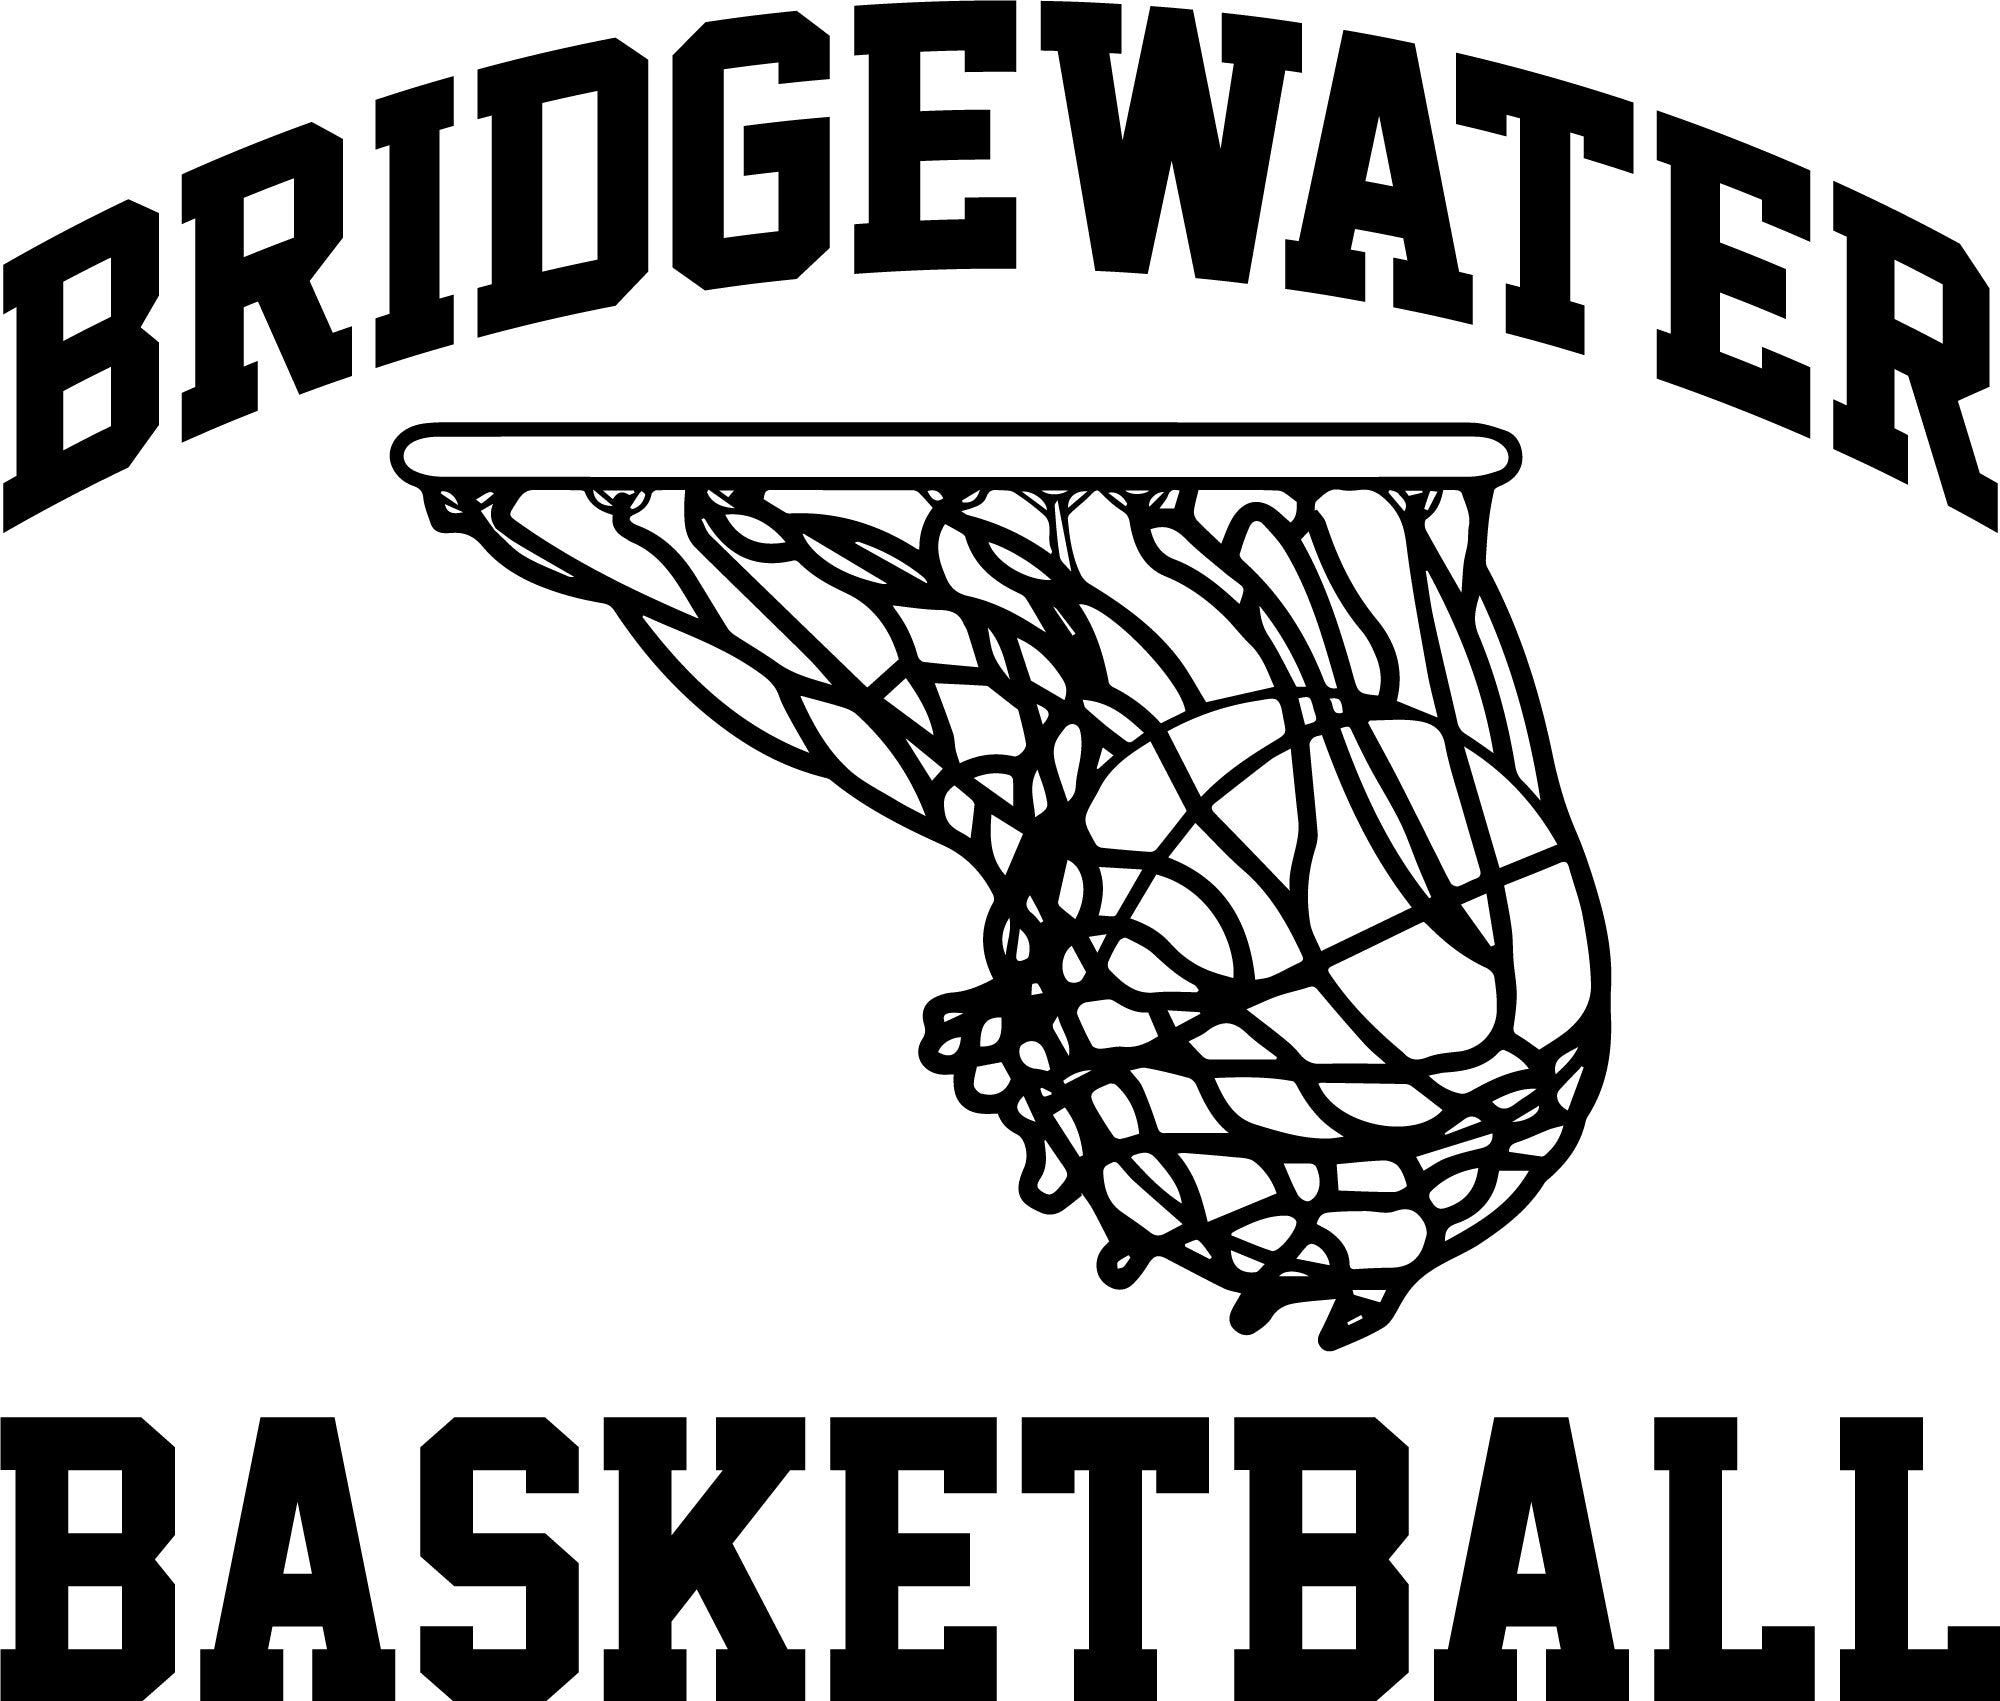 Bridgewater Basketball